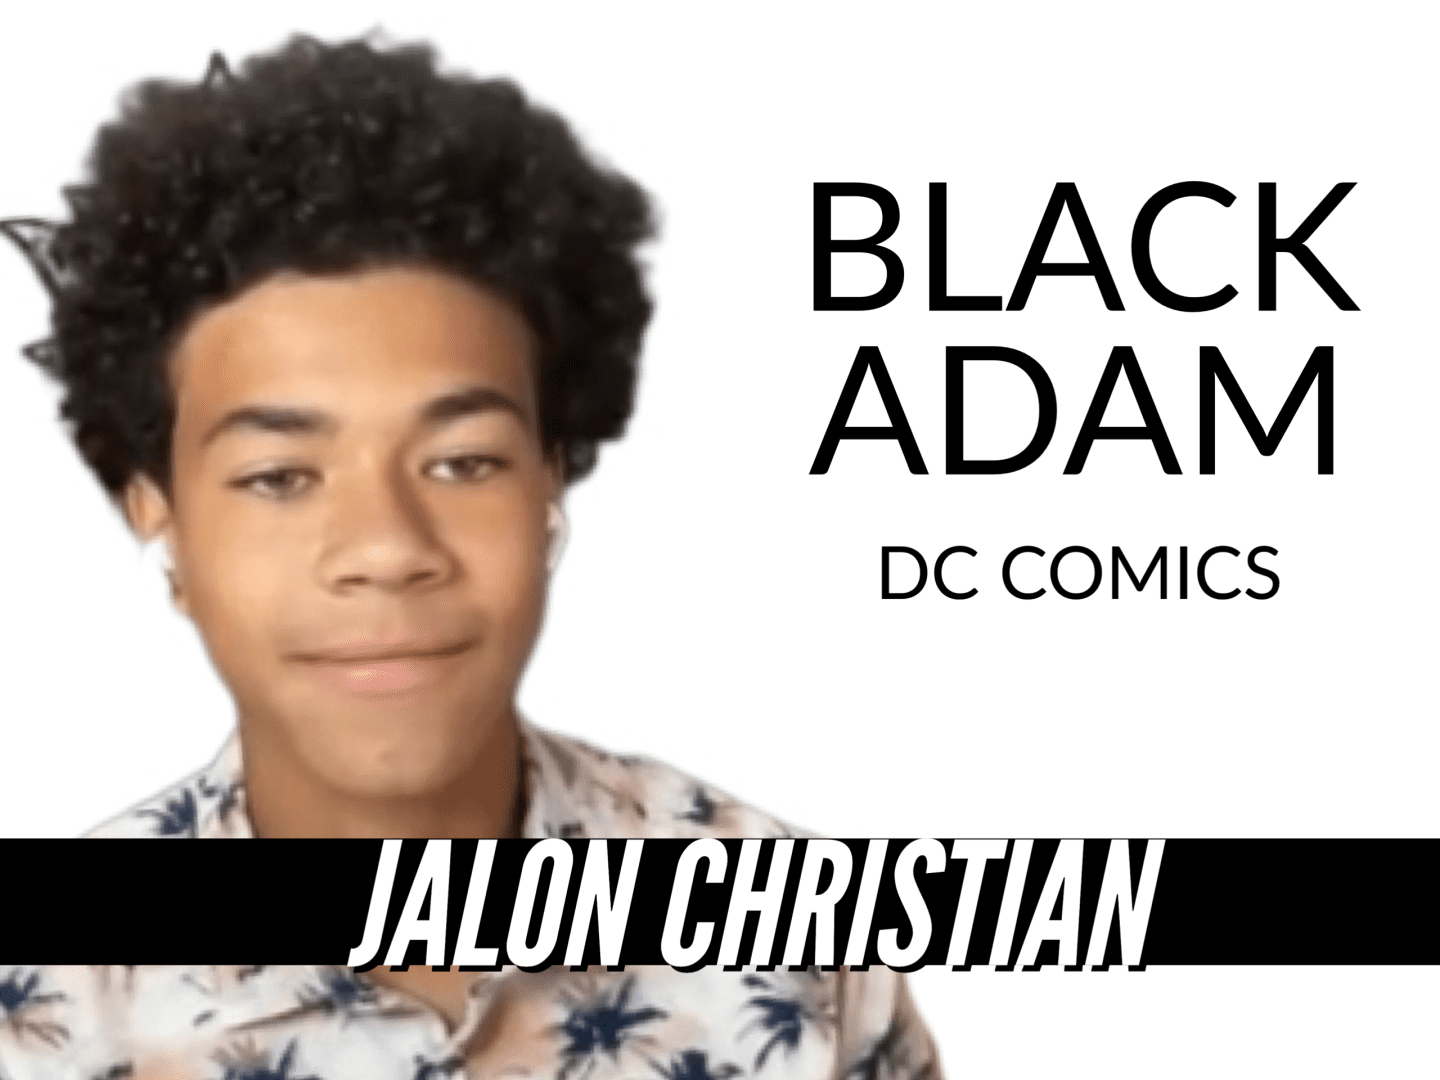 Jalon Christian debuts in his 1st feature film 'Black Adam'